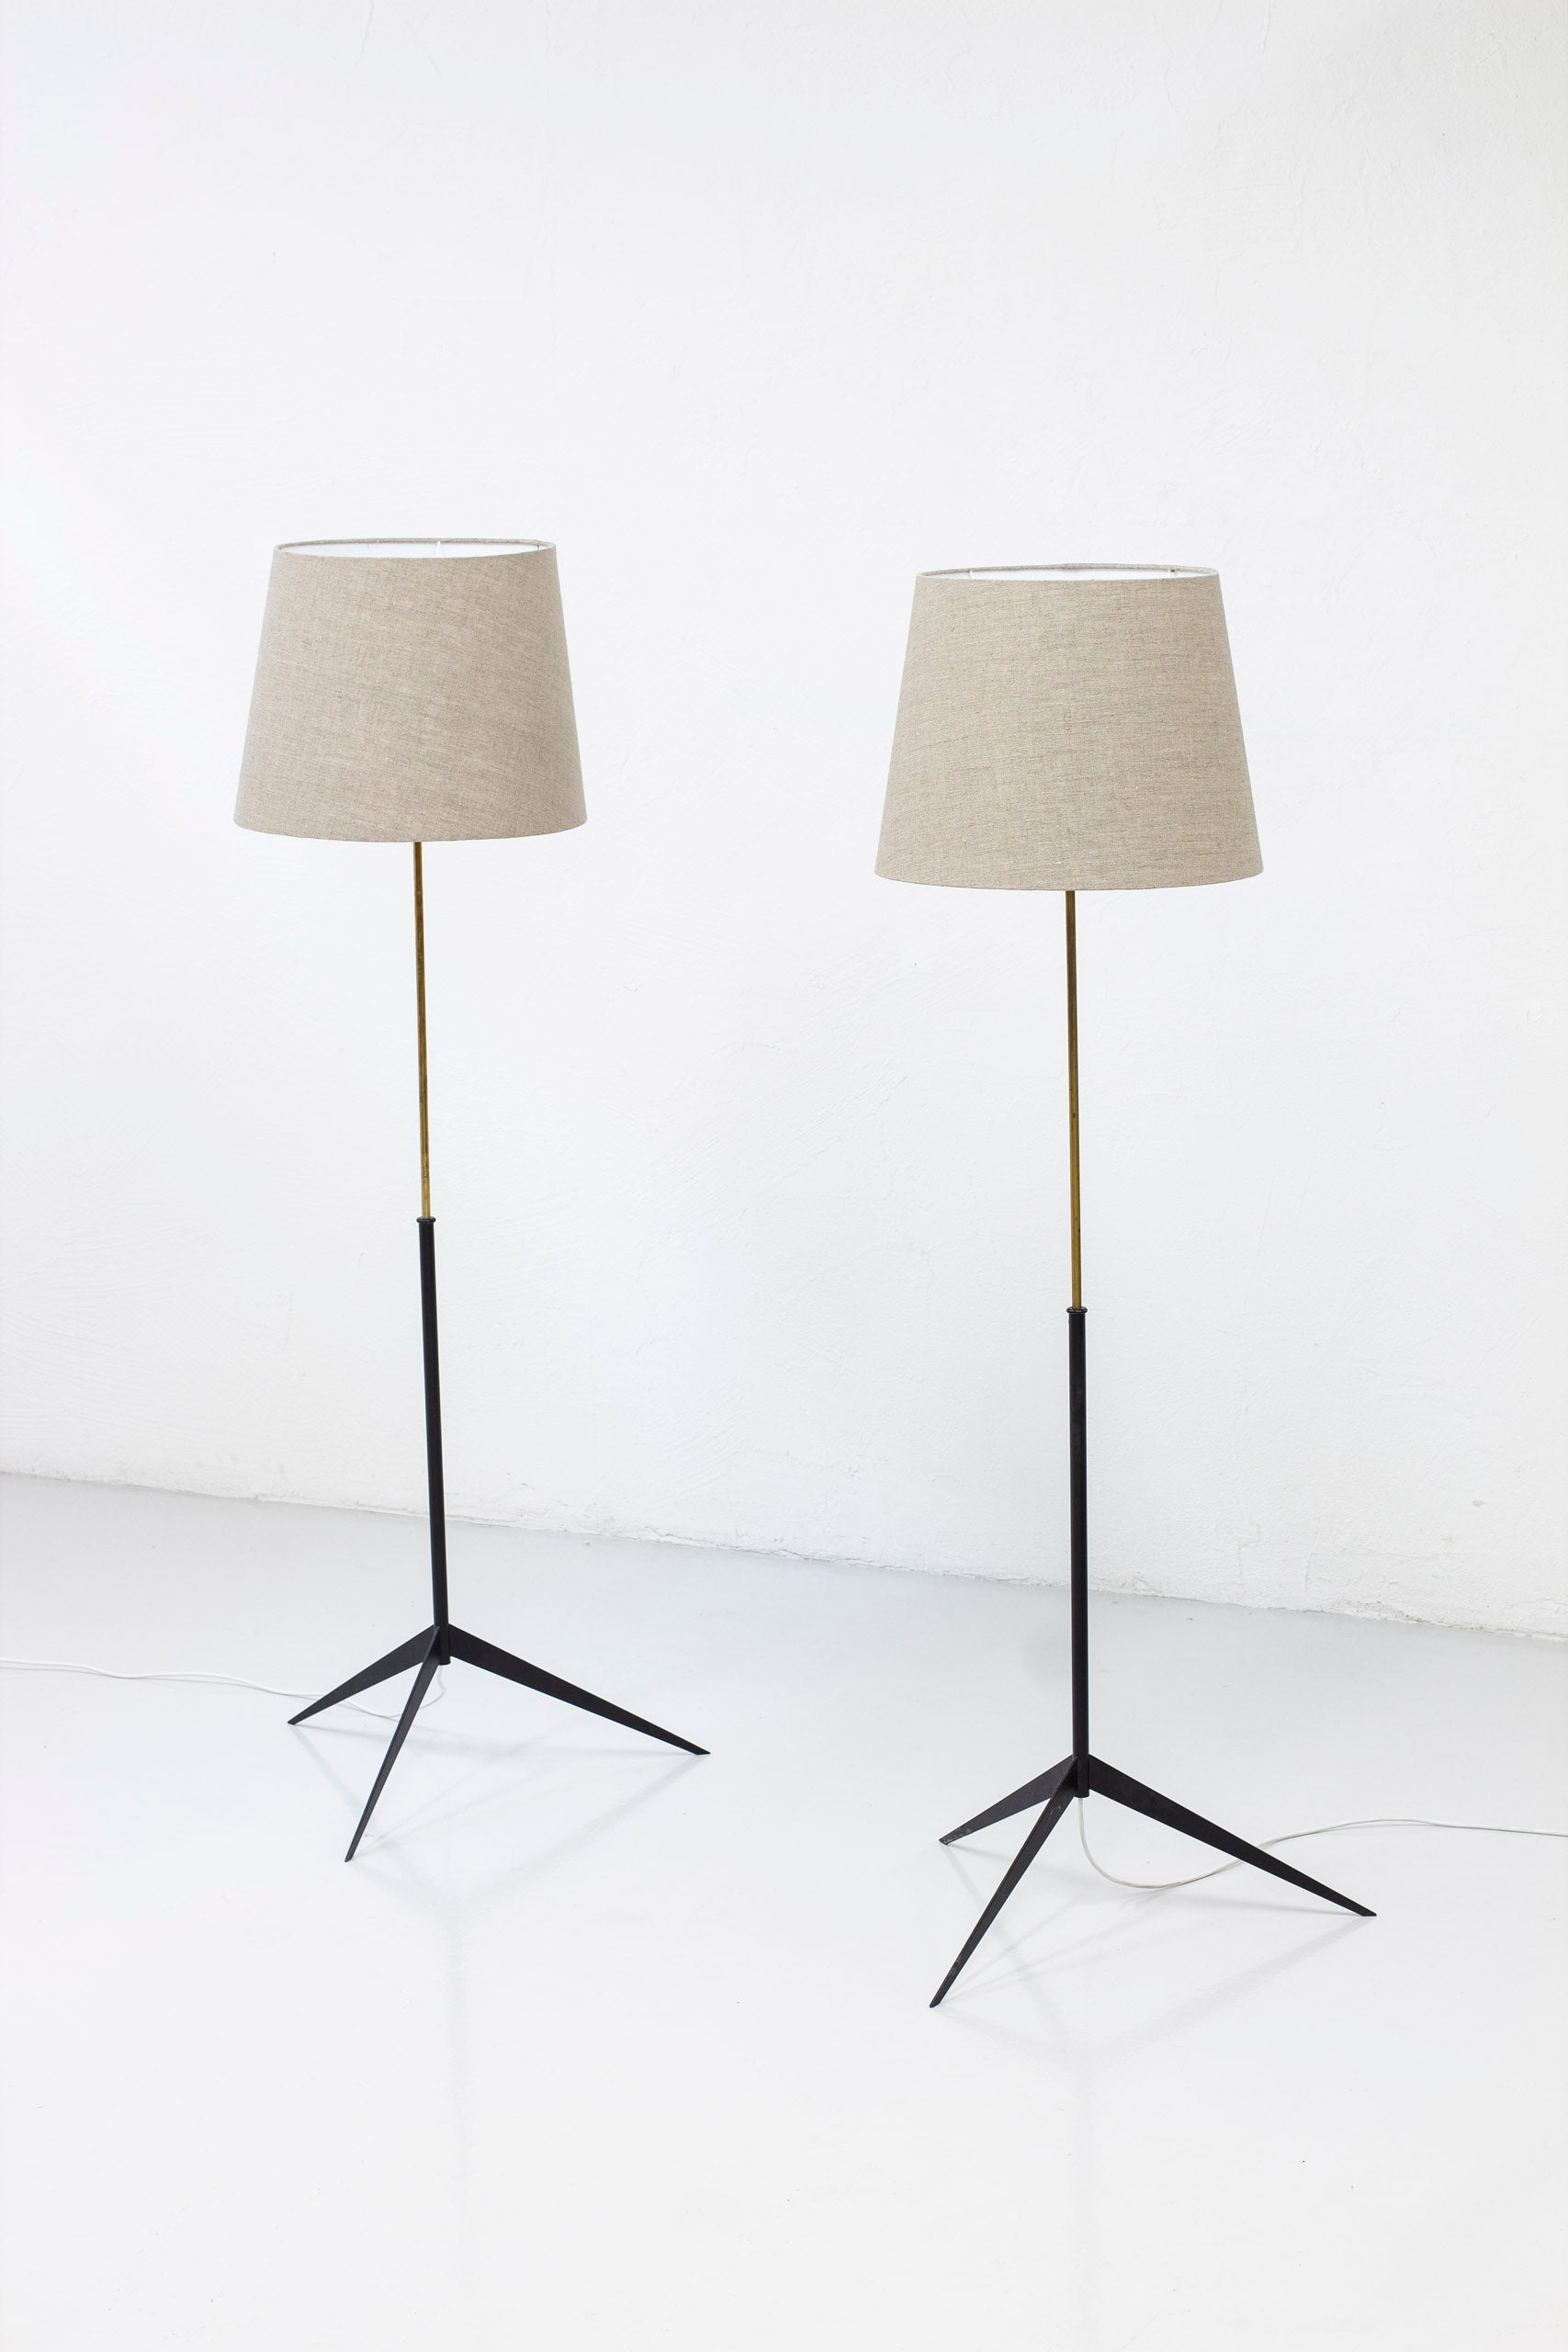 Floor lamps "G-30R" by Alf Svensson